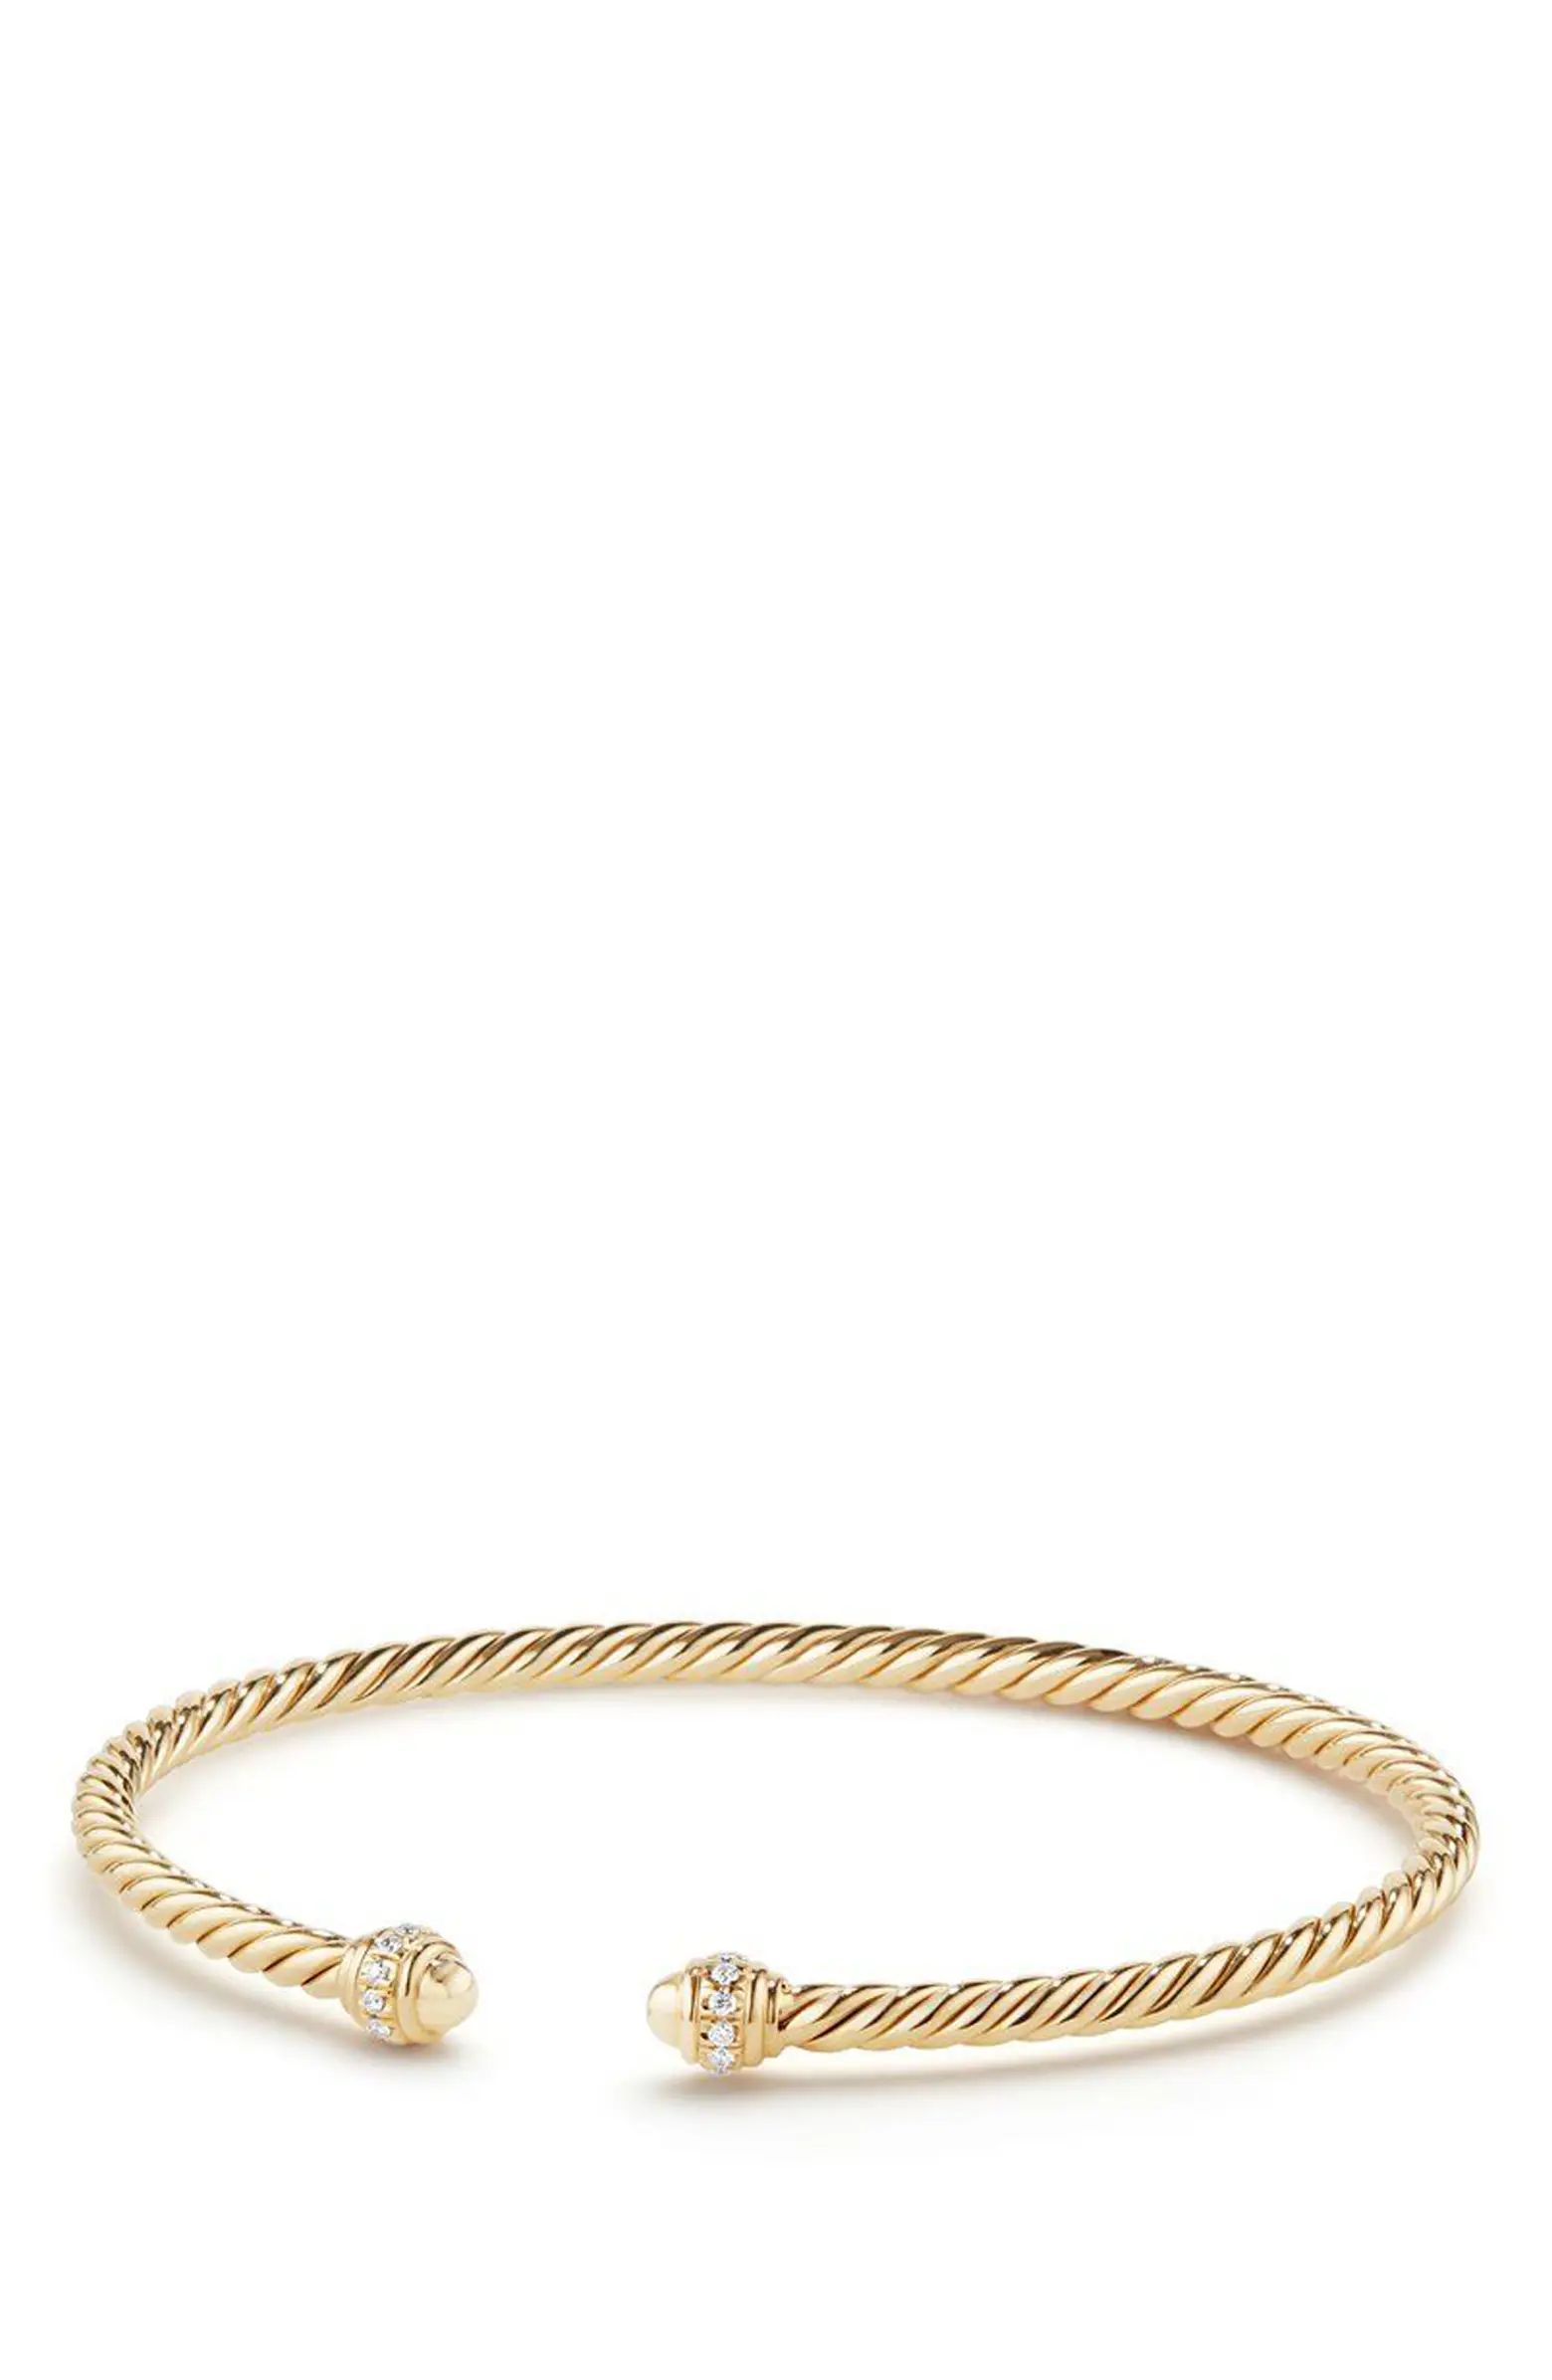 Cable Spira Bracelet in 18K Gold with Diamonds, 3mm | Nordstrom